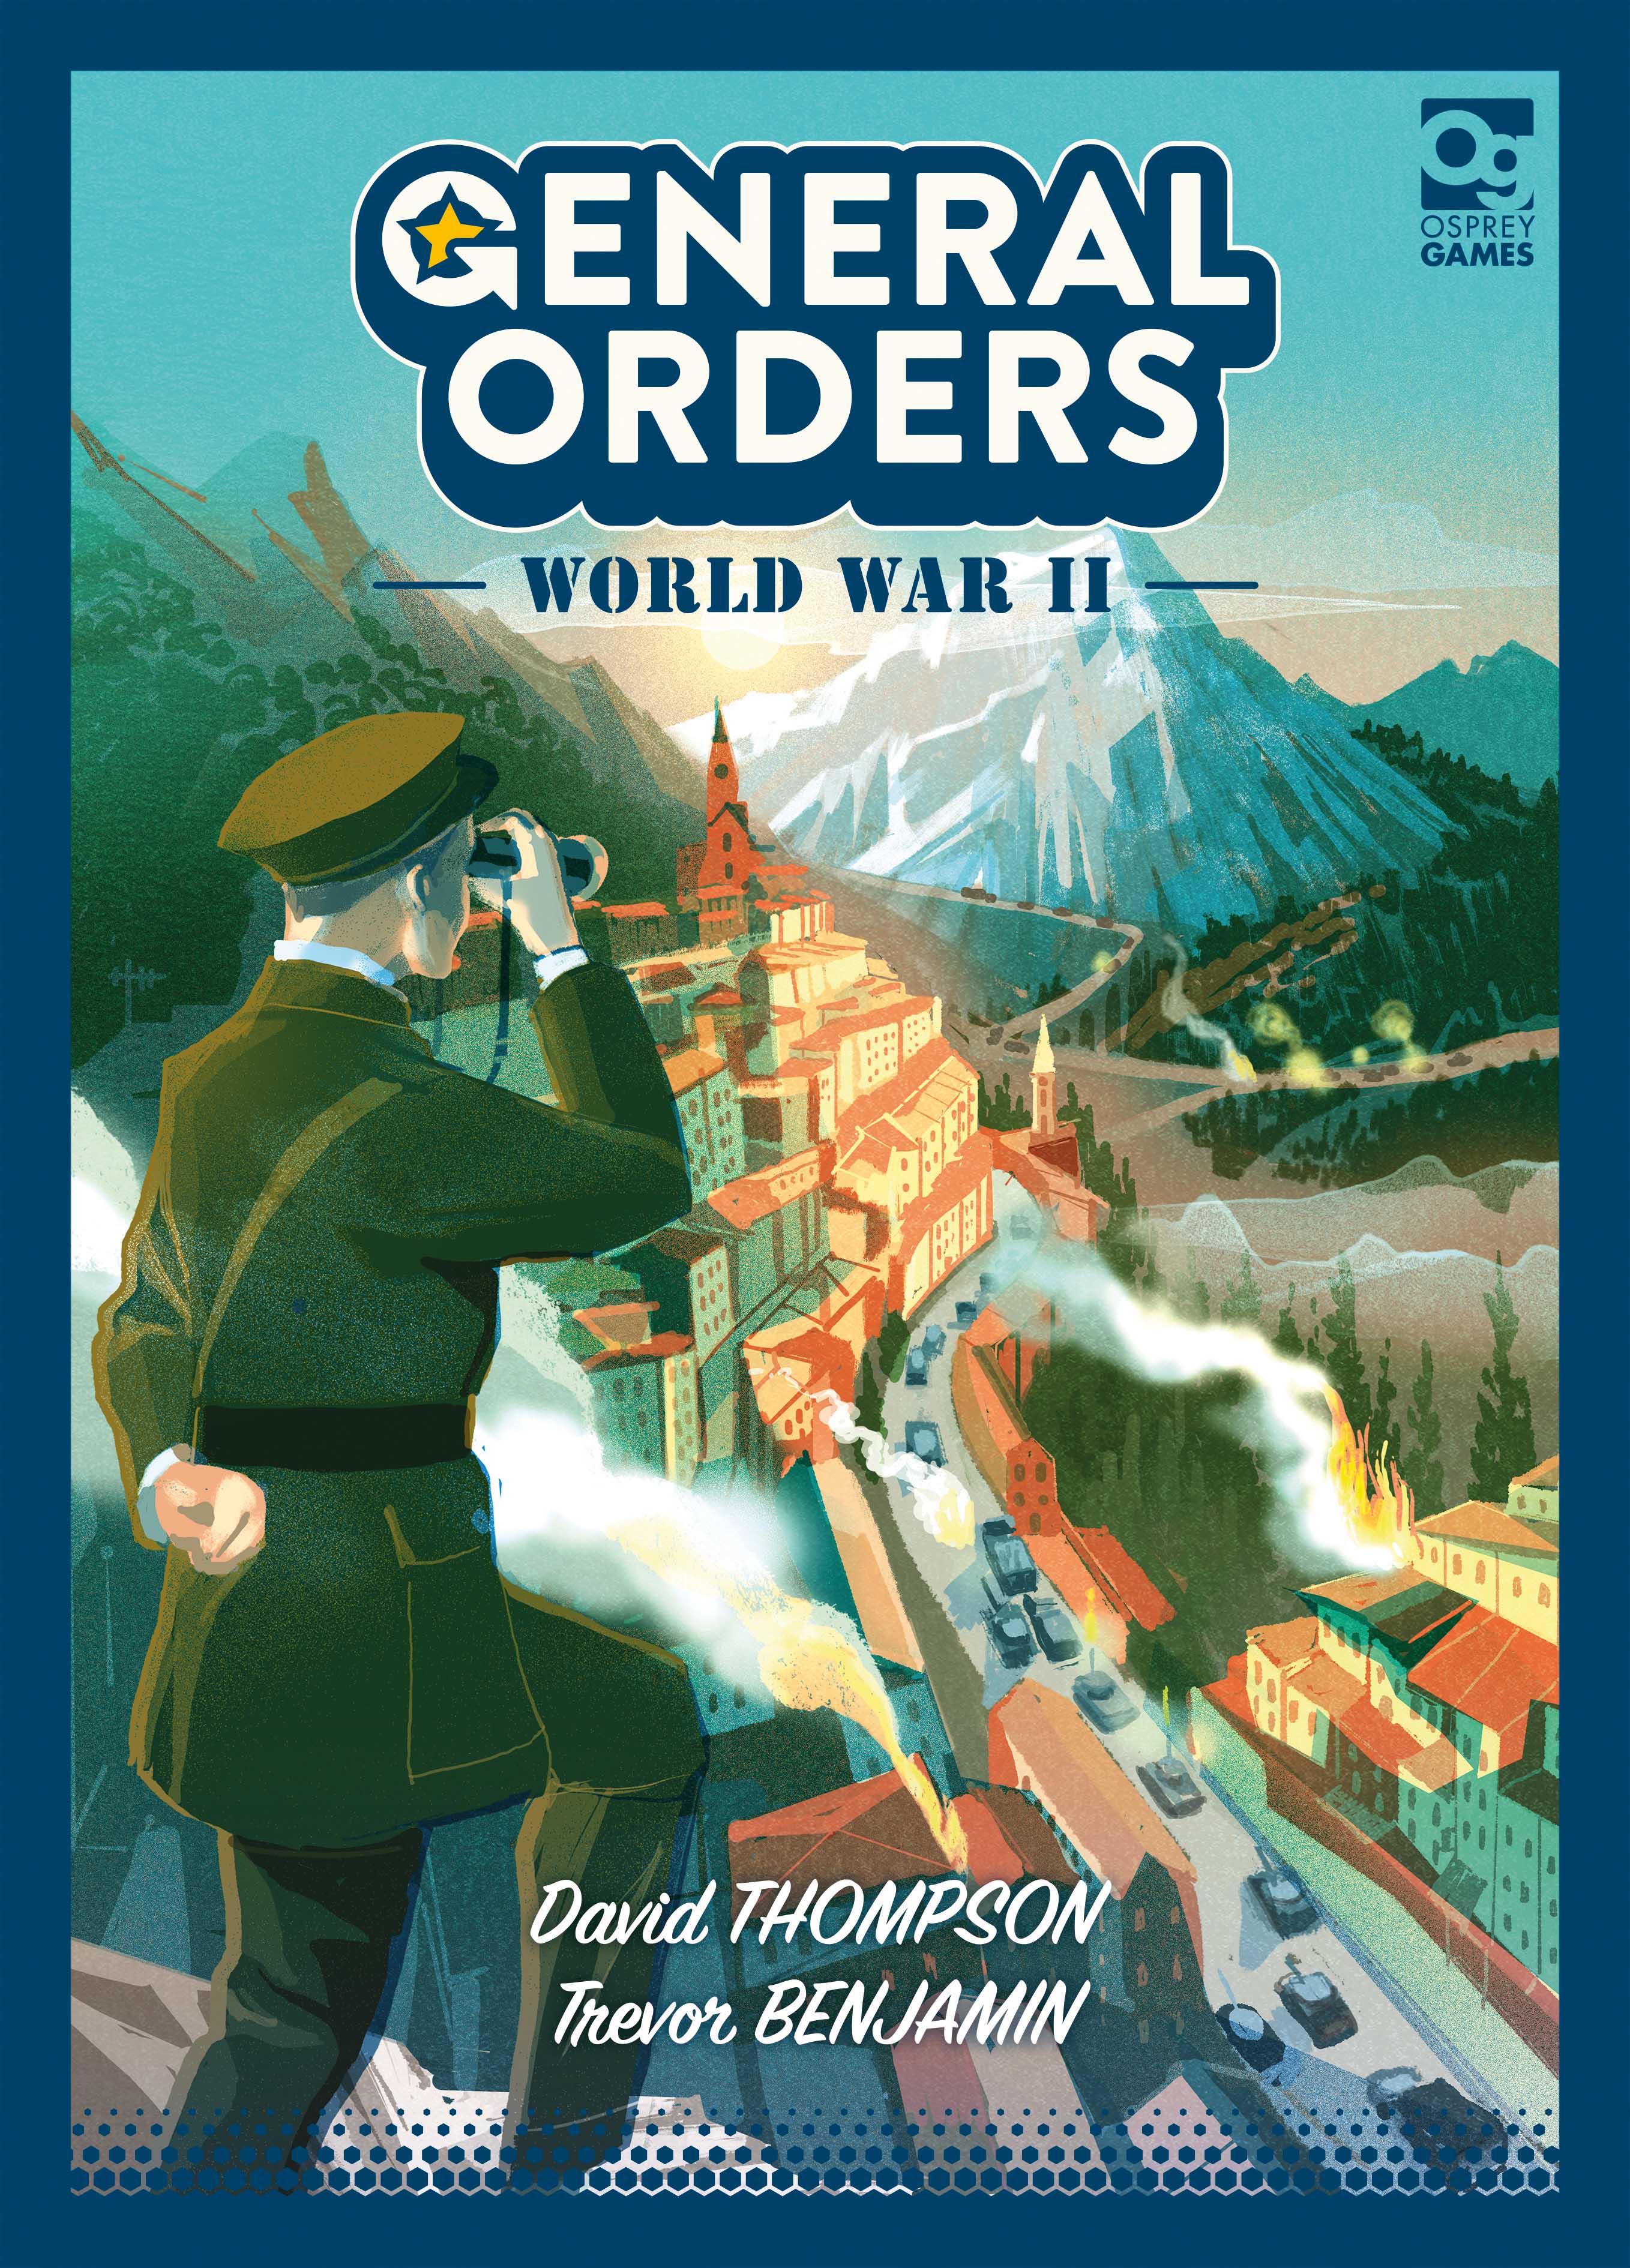 General Orders: World War II book jacket